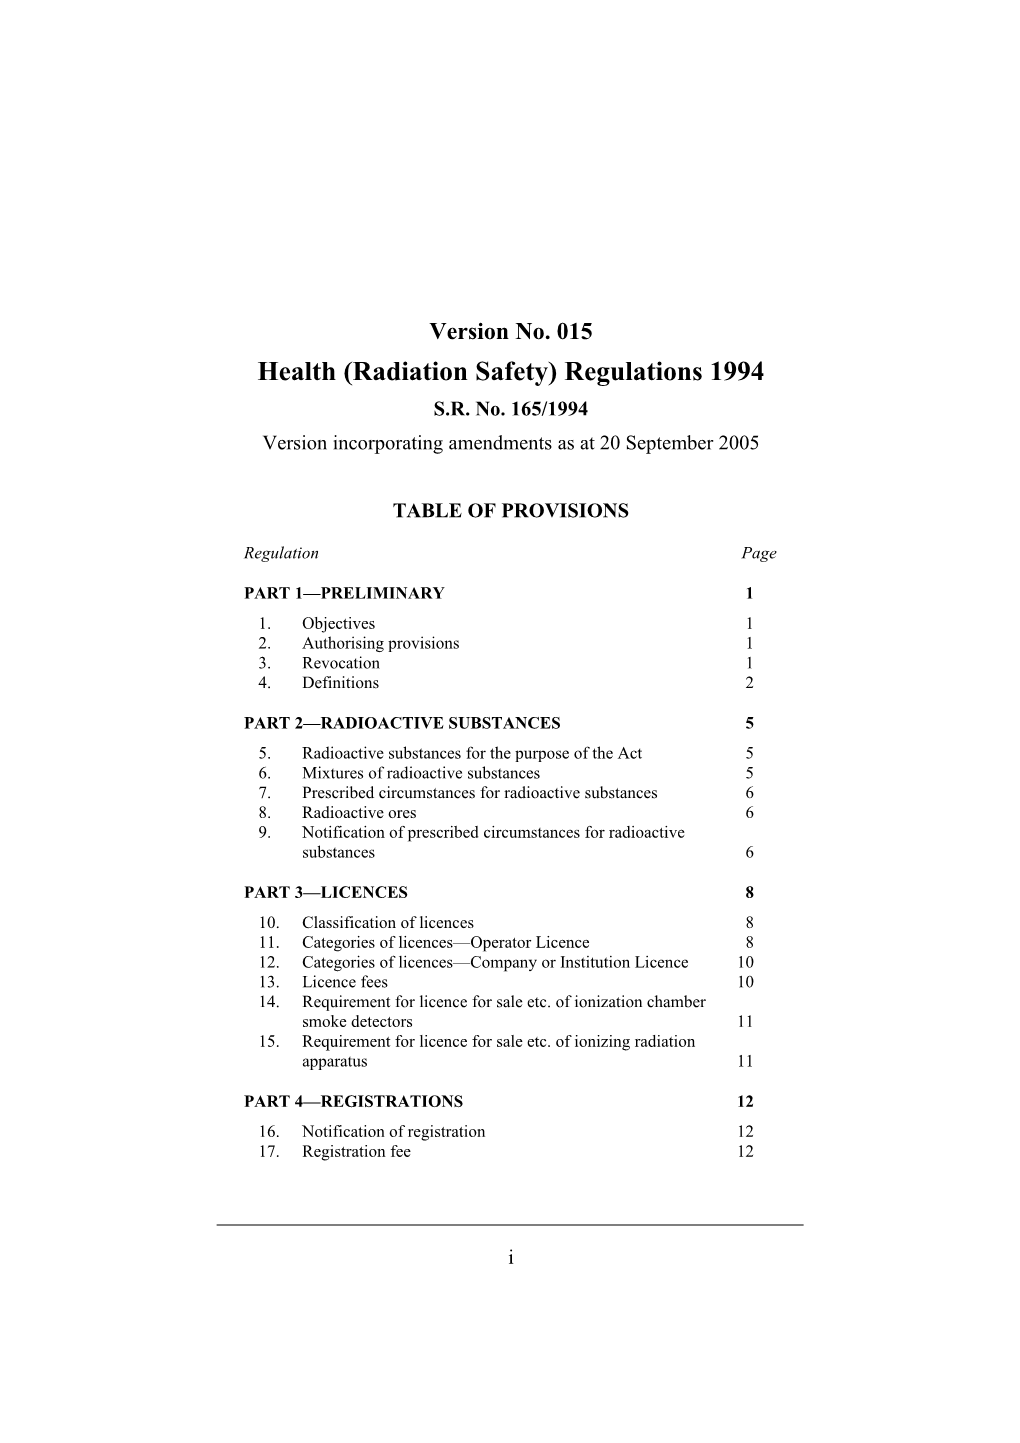 Health (Radiation Safety) Regulations 1994